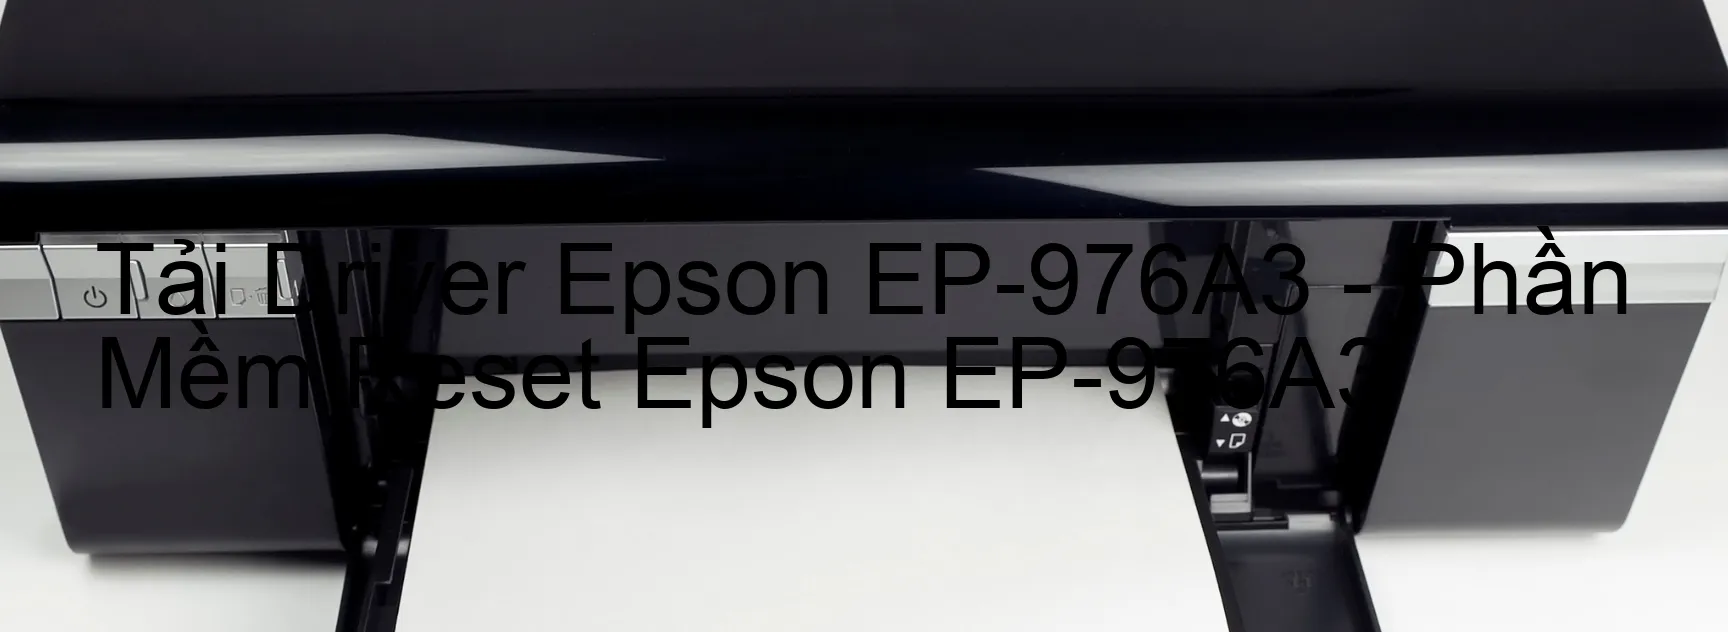 Driver Epson EP-976A3, Phần Mềm Reset Epson EP-976A3